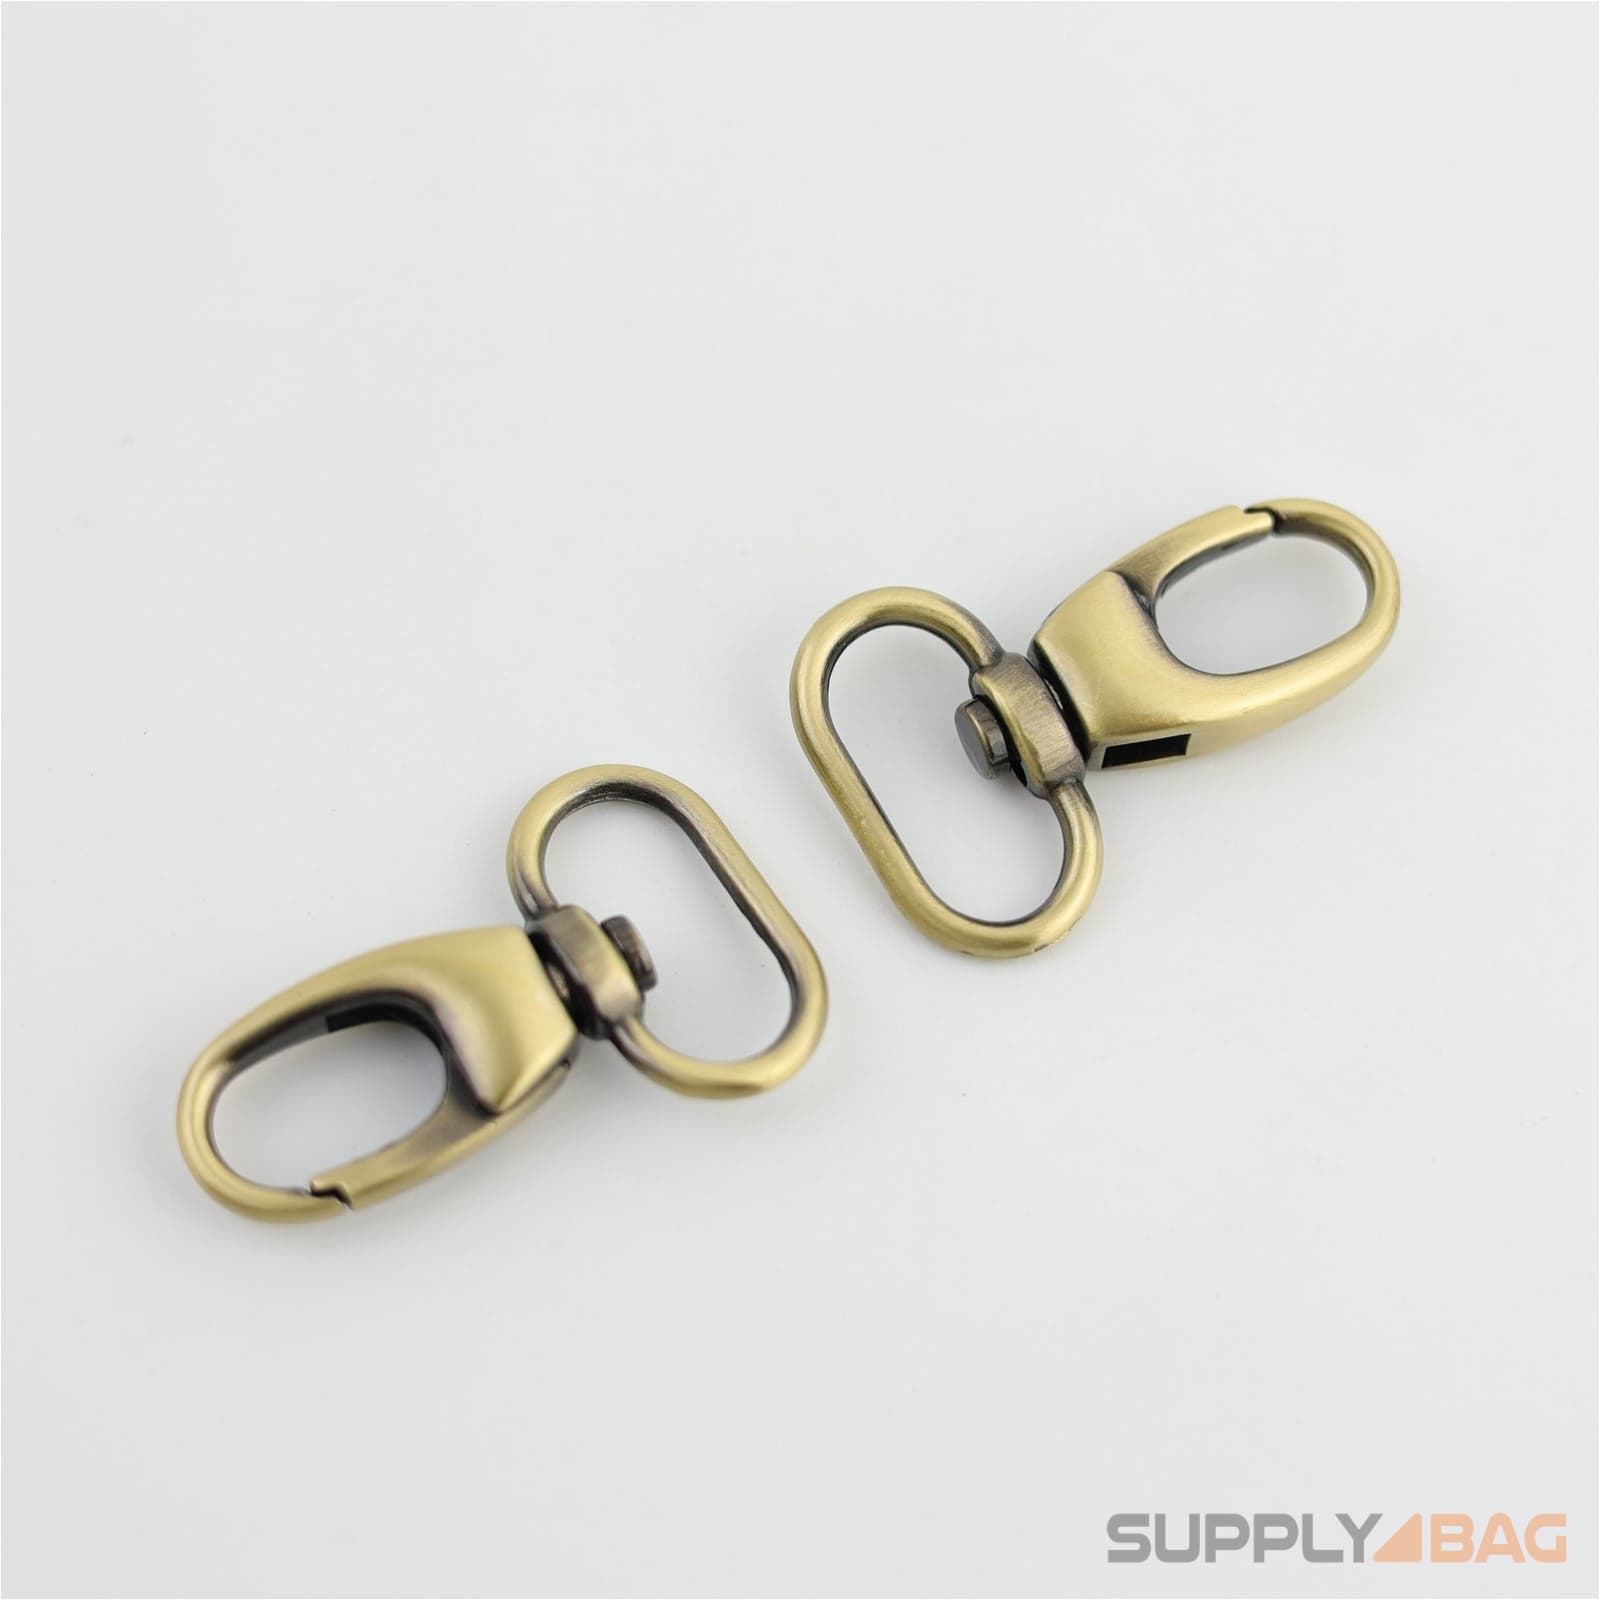 Antique Brass Swivel Snap Hooks 3/4 inch - 2 Pack